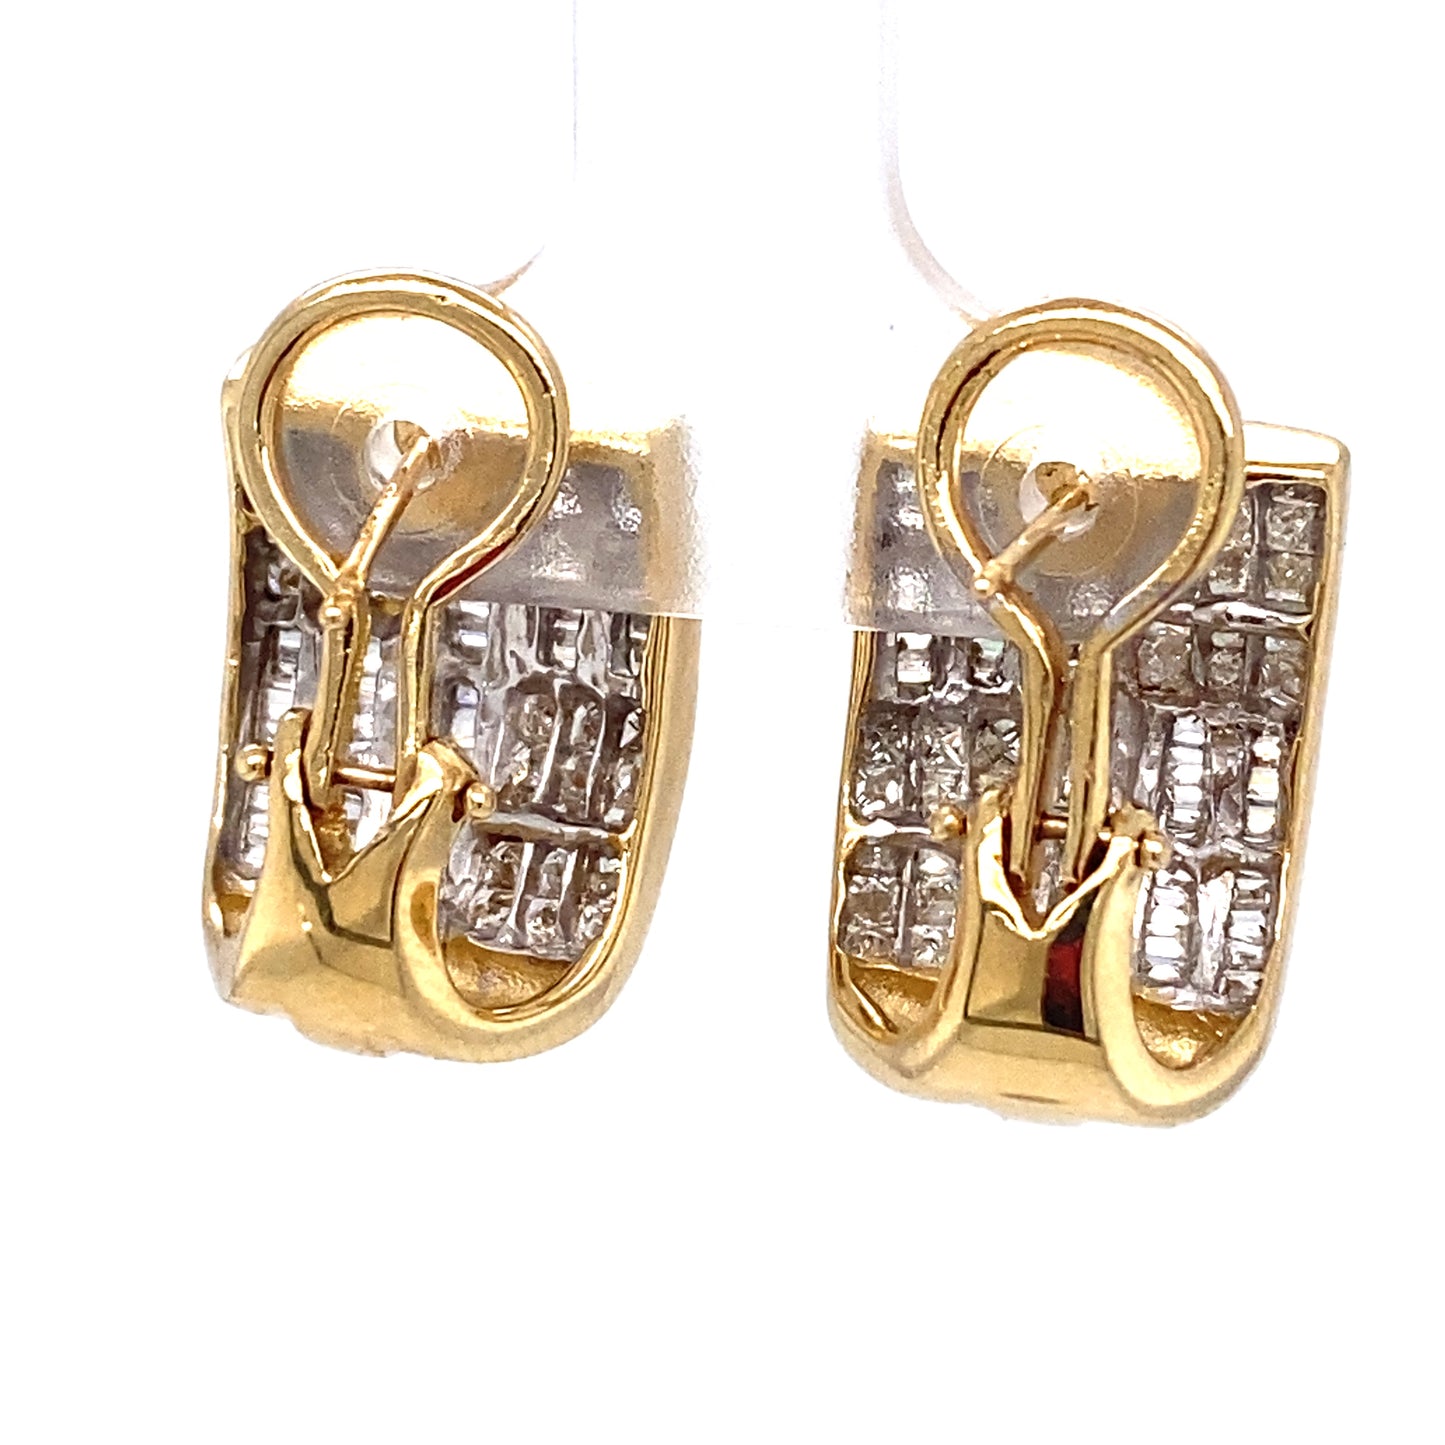 Circa 1980s 1.50 Carat Square Diamond Half Hoop Earrings in 14K Gold